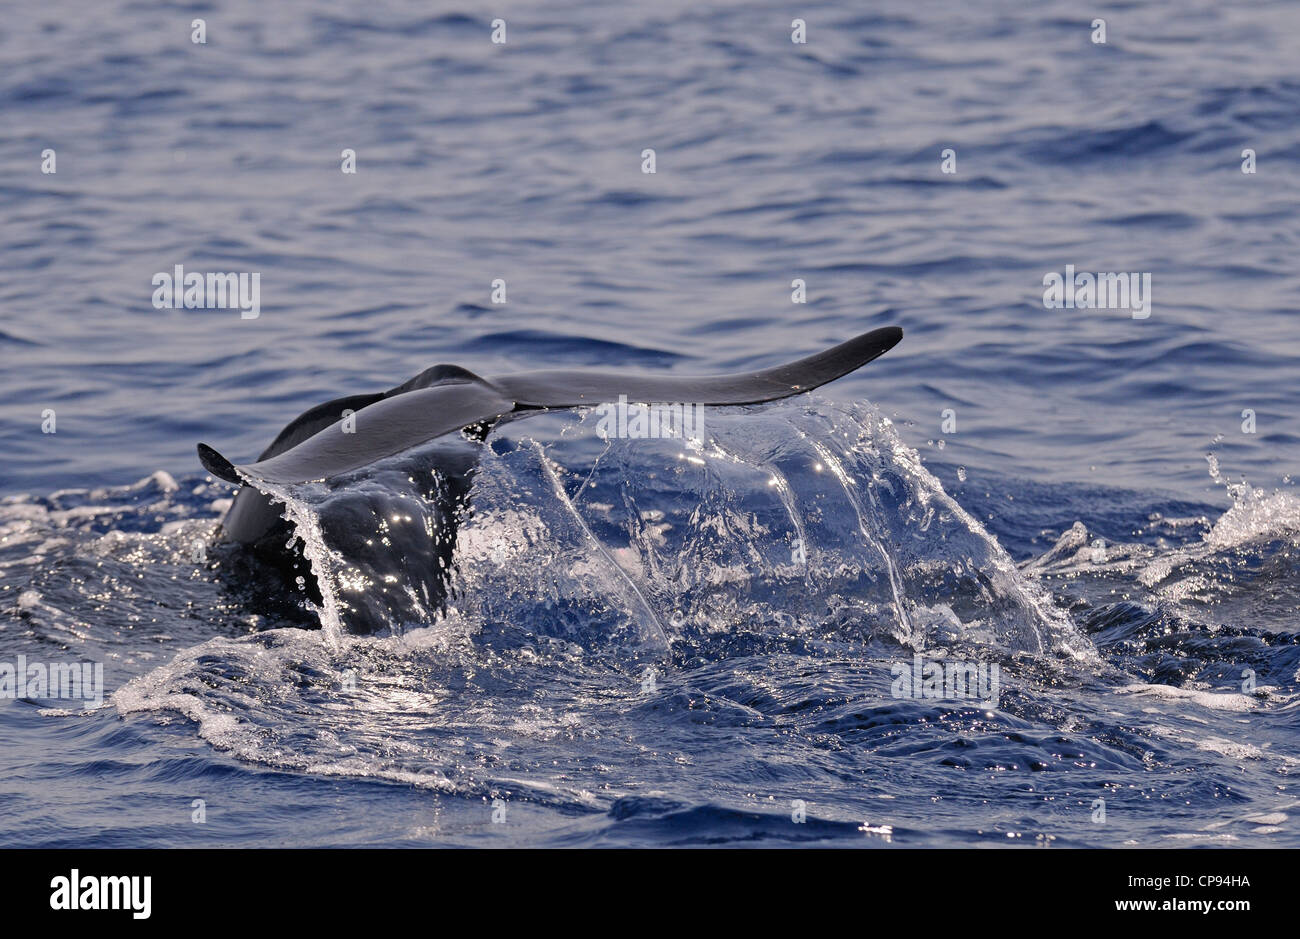 Kurz-finned Grindwal (Globicephala Macrorhynchus) Tauchen mit angehobenen Schweif Fluke, Malediven Stockfoto